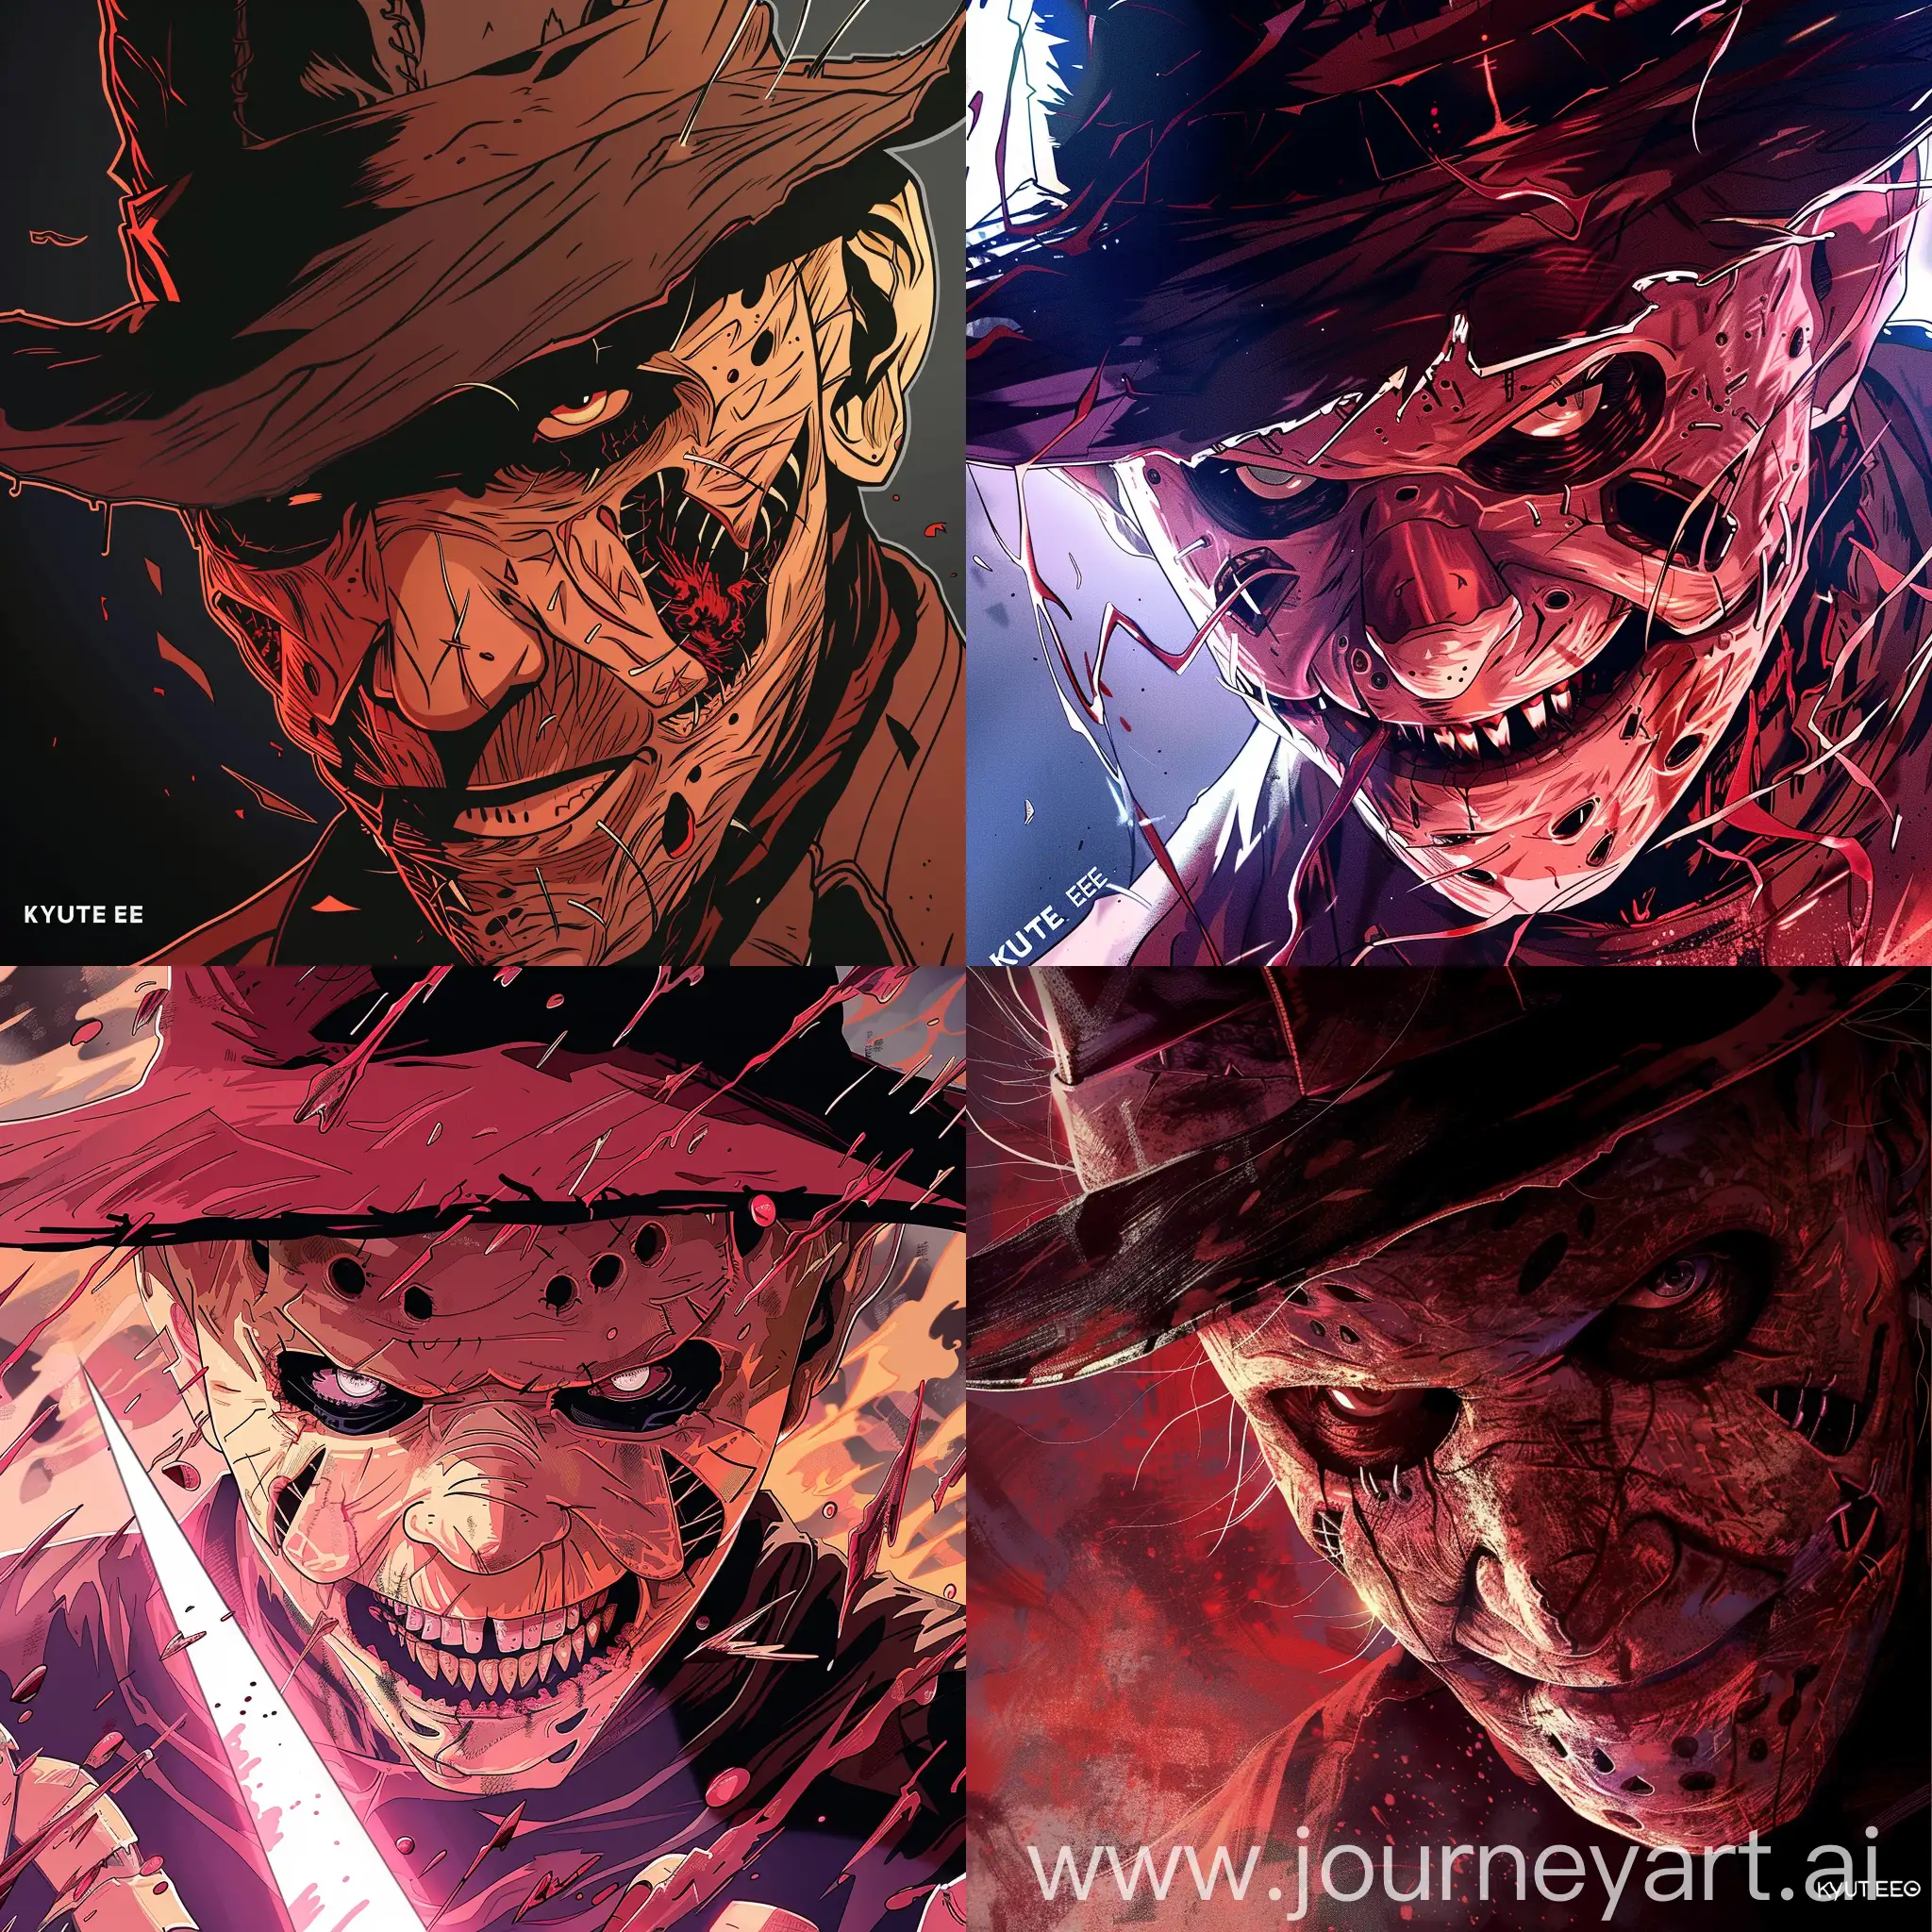 Anime style illustration of Freddy Krueger, nightmare on elm street, his iconic face, art, illustration by Kyutae Lee